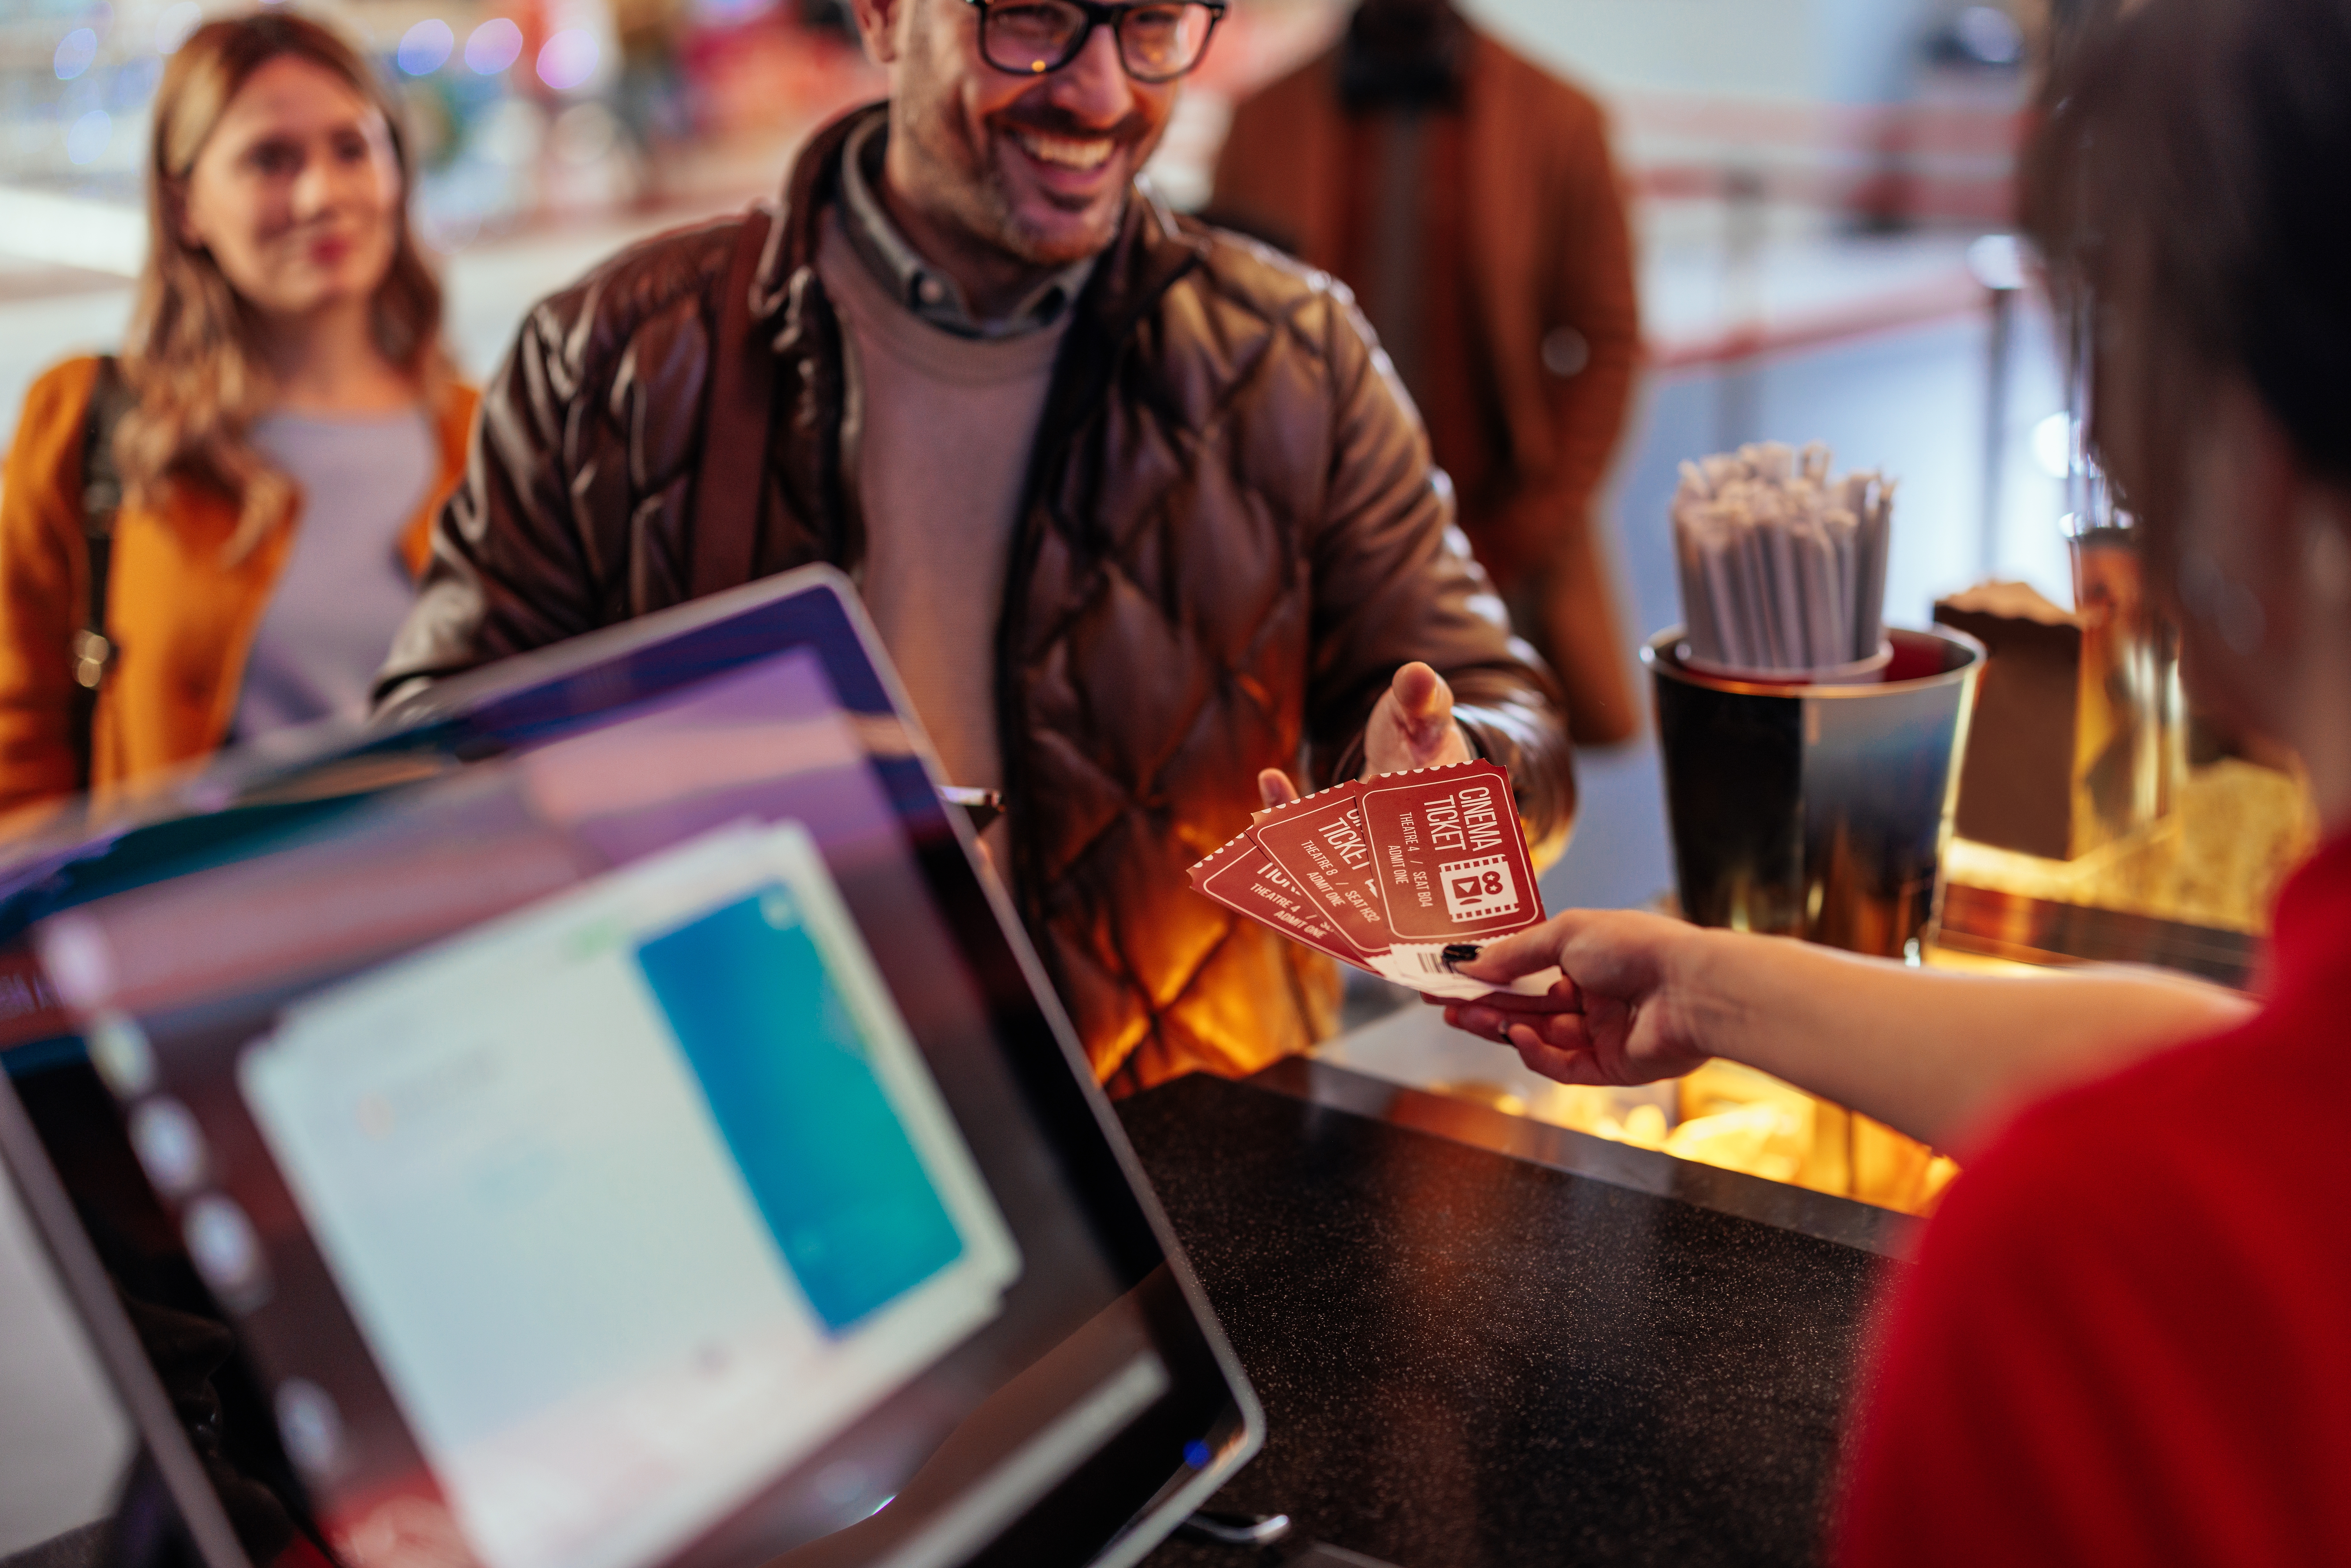 A man buying movie tickets | Source: Shutterstock